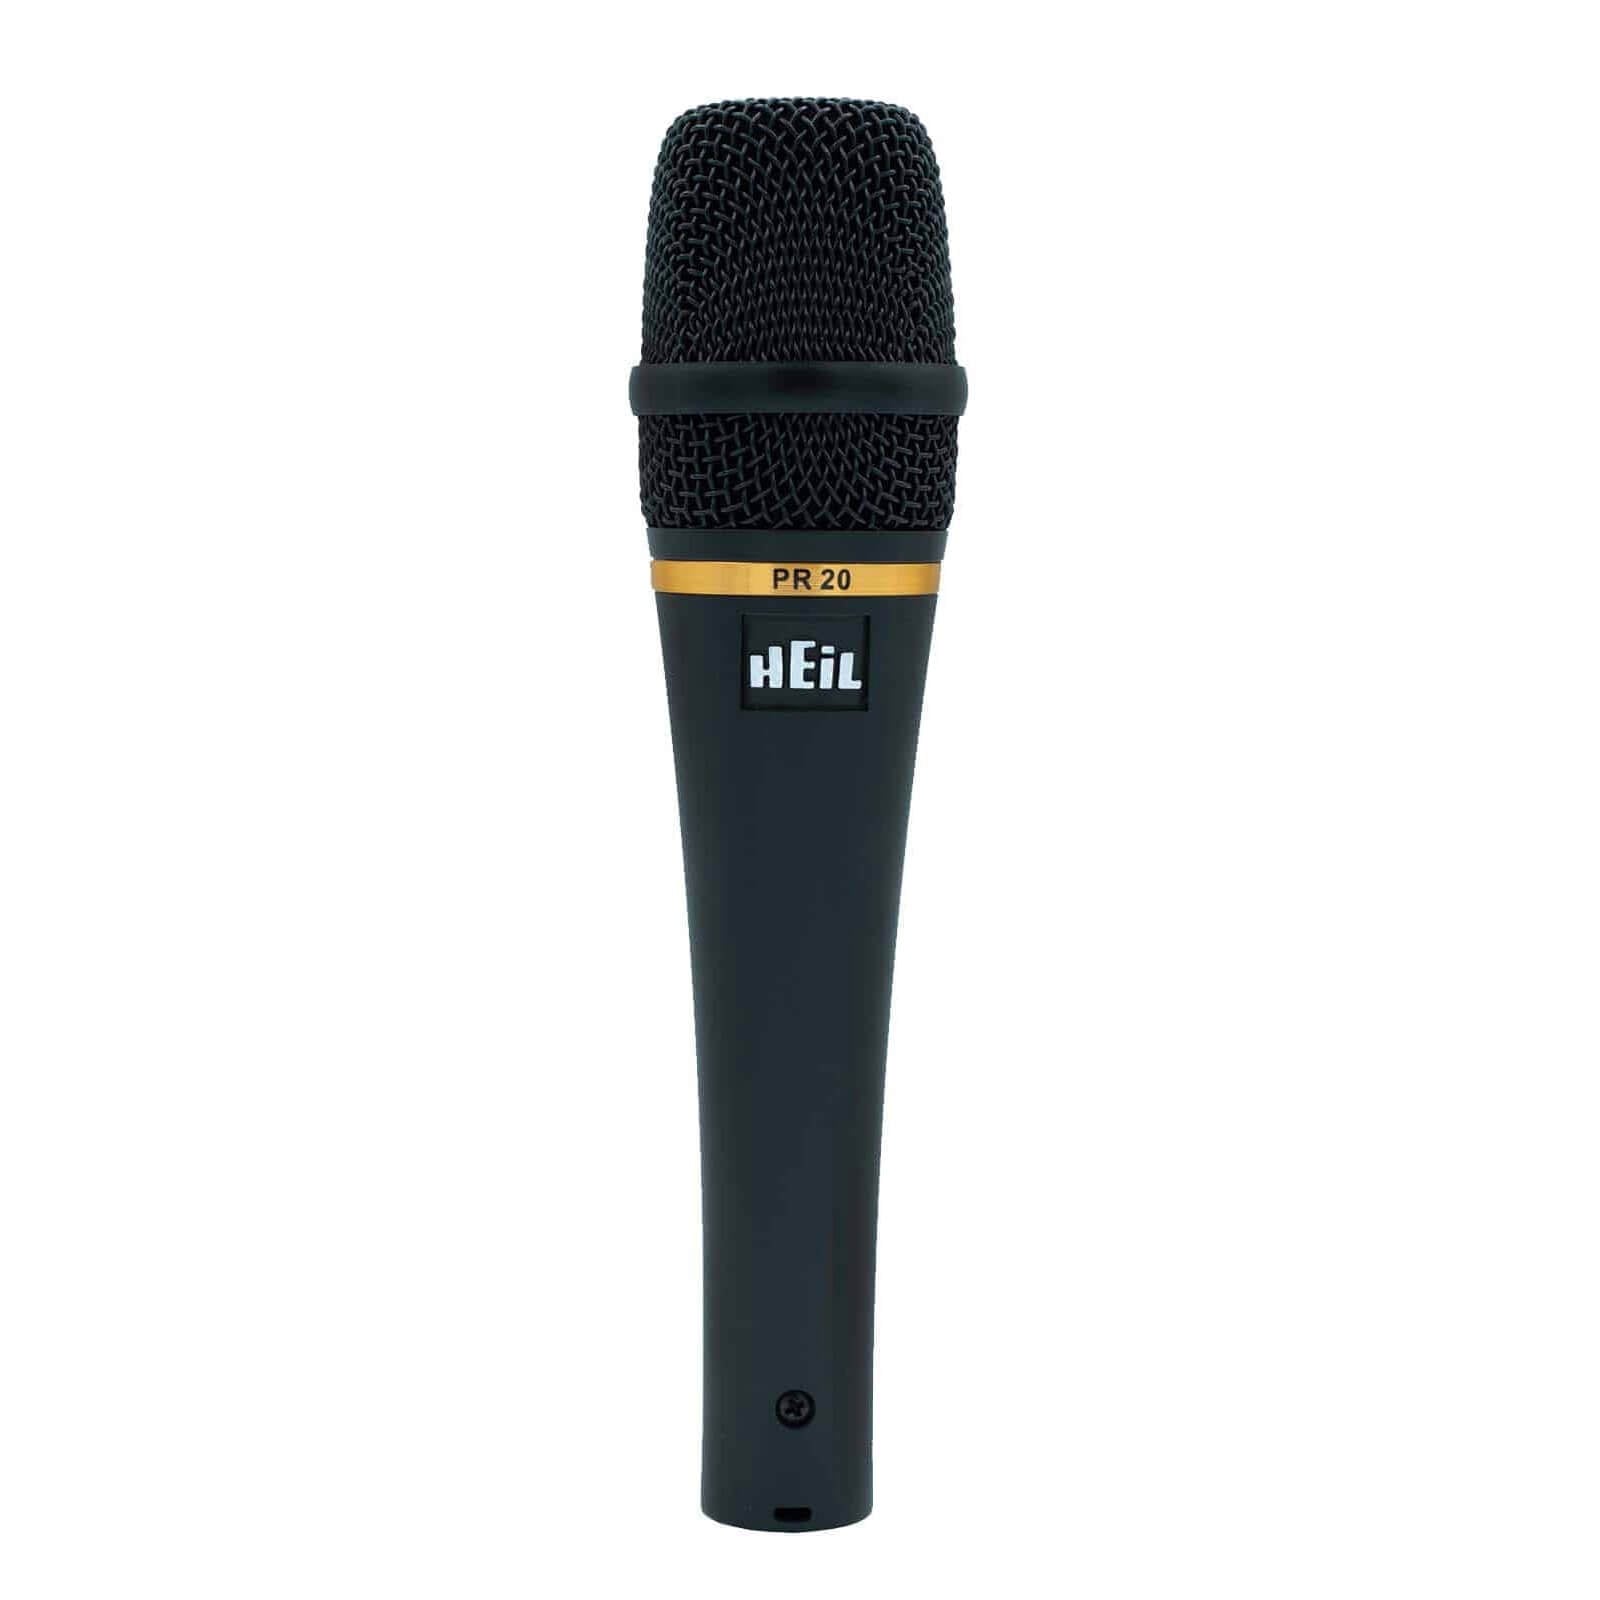 Heil PR 20 UT Handheld Dynamic Vocal Microphone